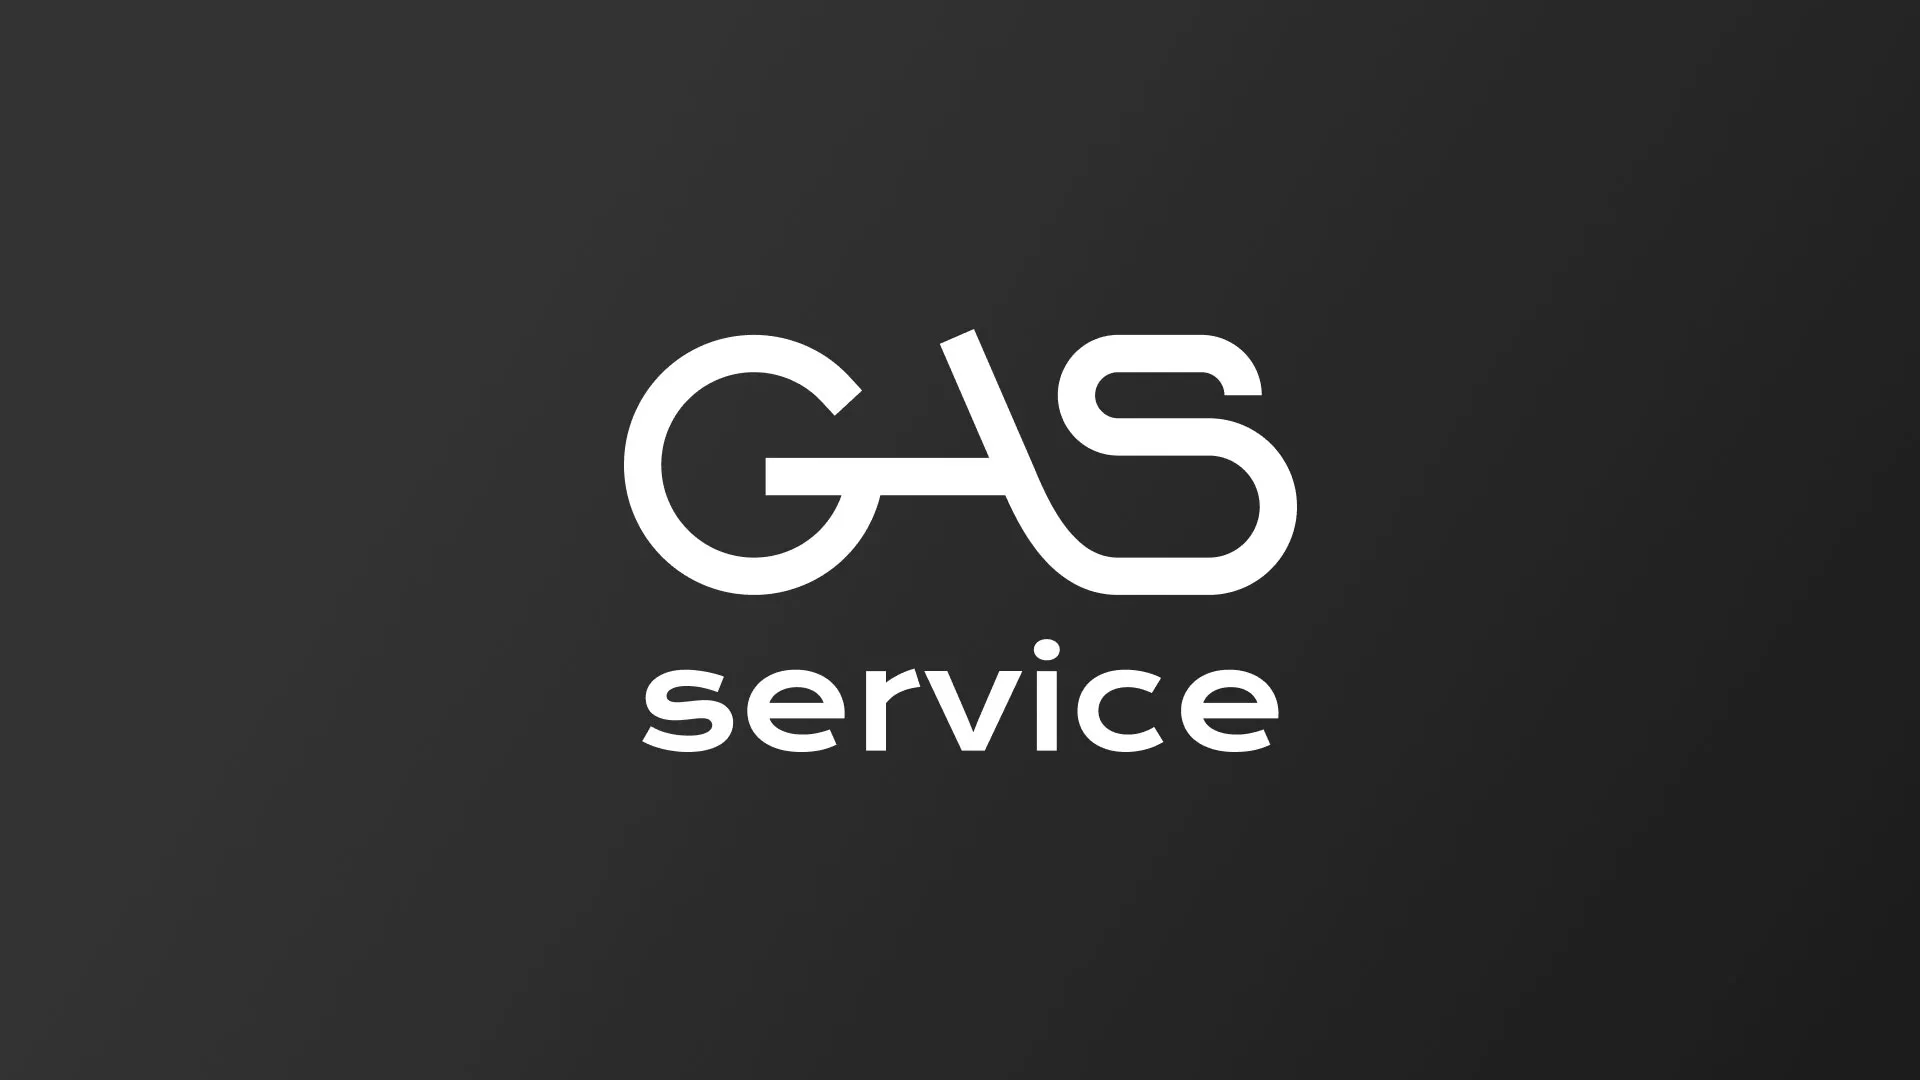 Разработка логотипа компании «Сервис газ» в Харабалях